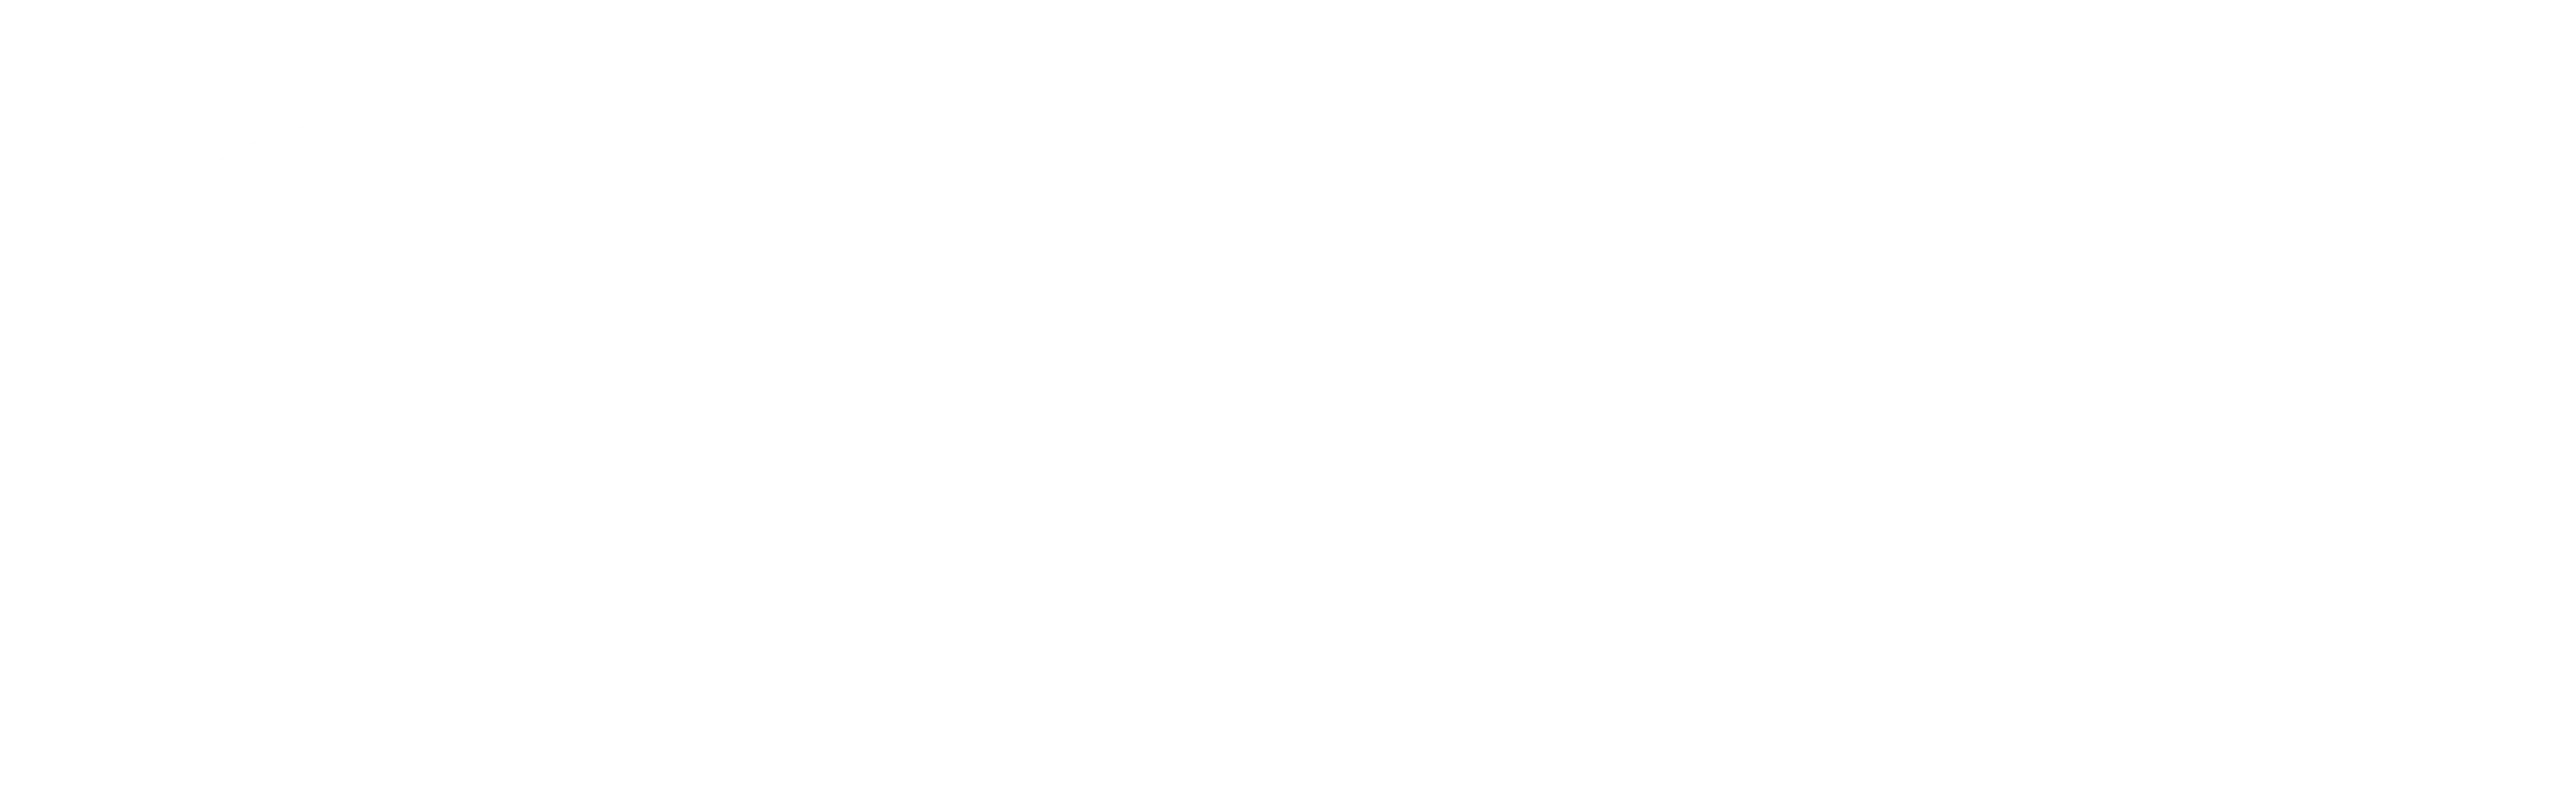 Campground-logo_full-01